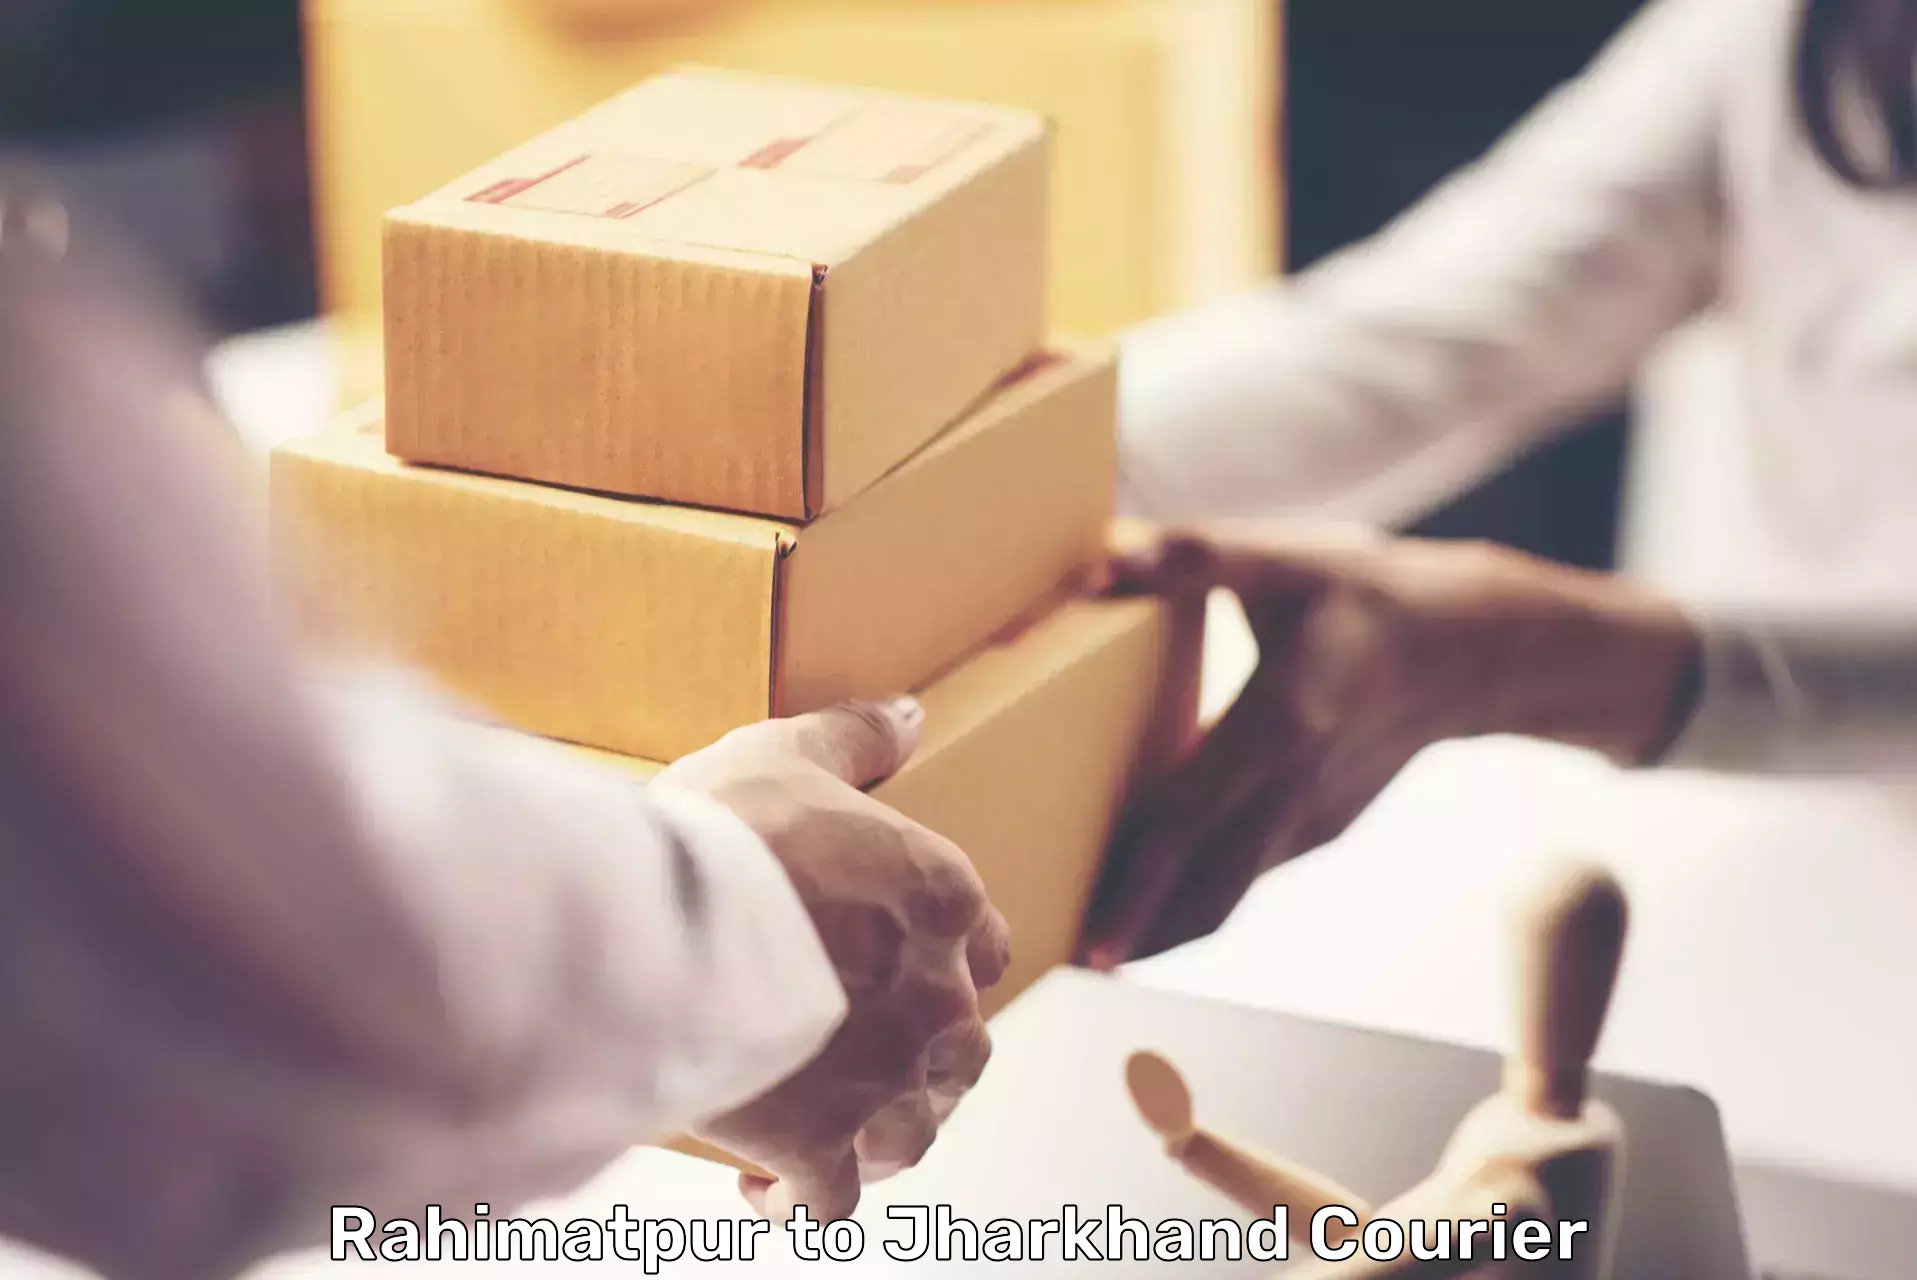 Affordable parcel service Rahimatpur to Bokaro